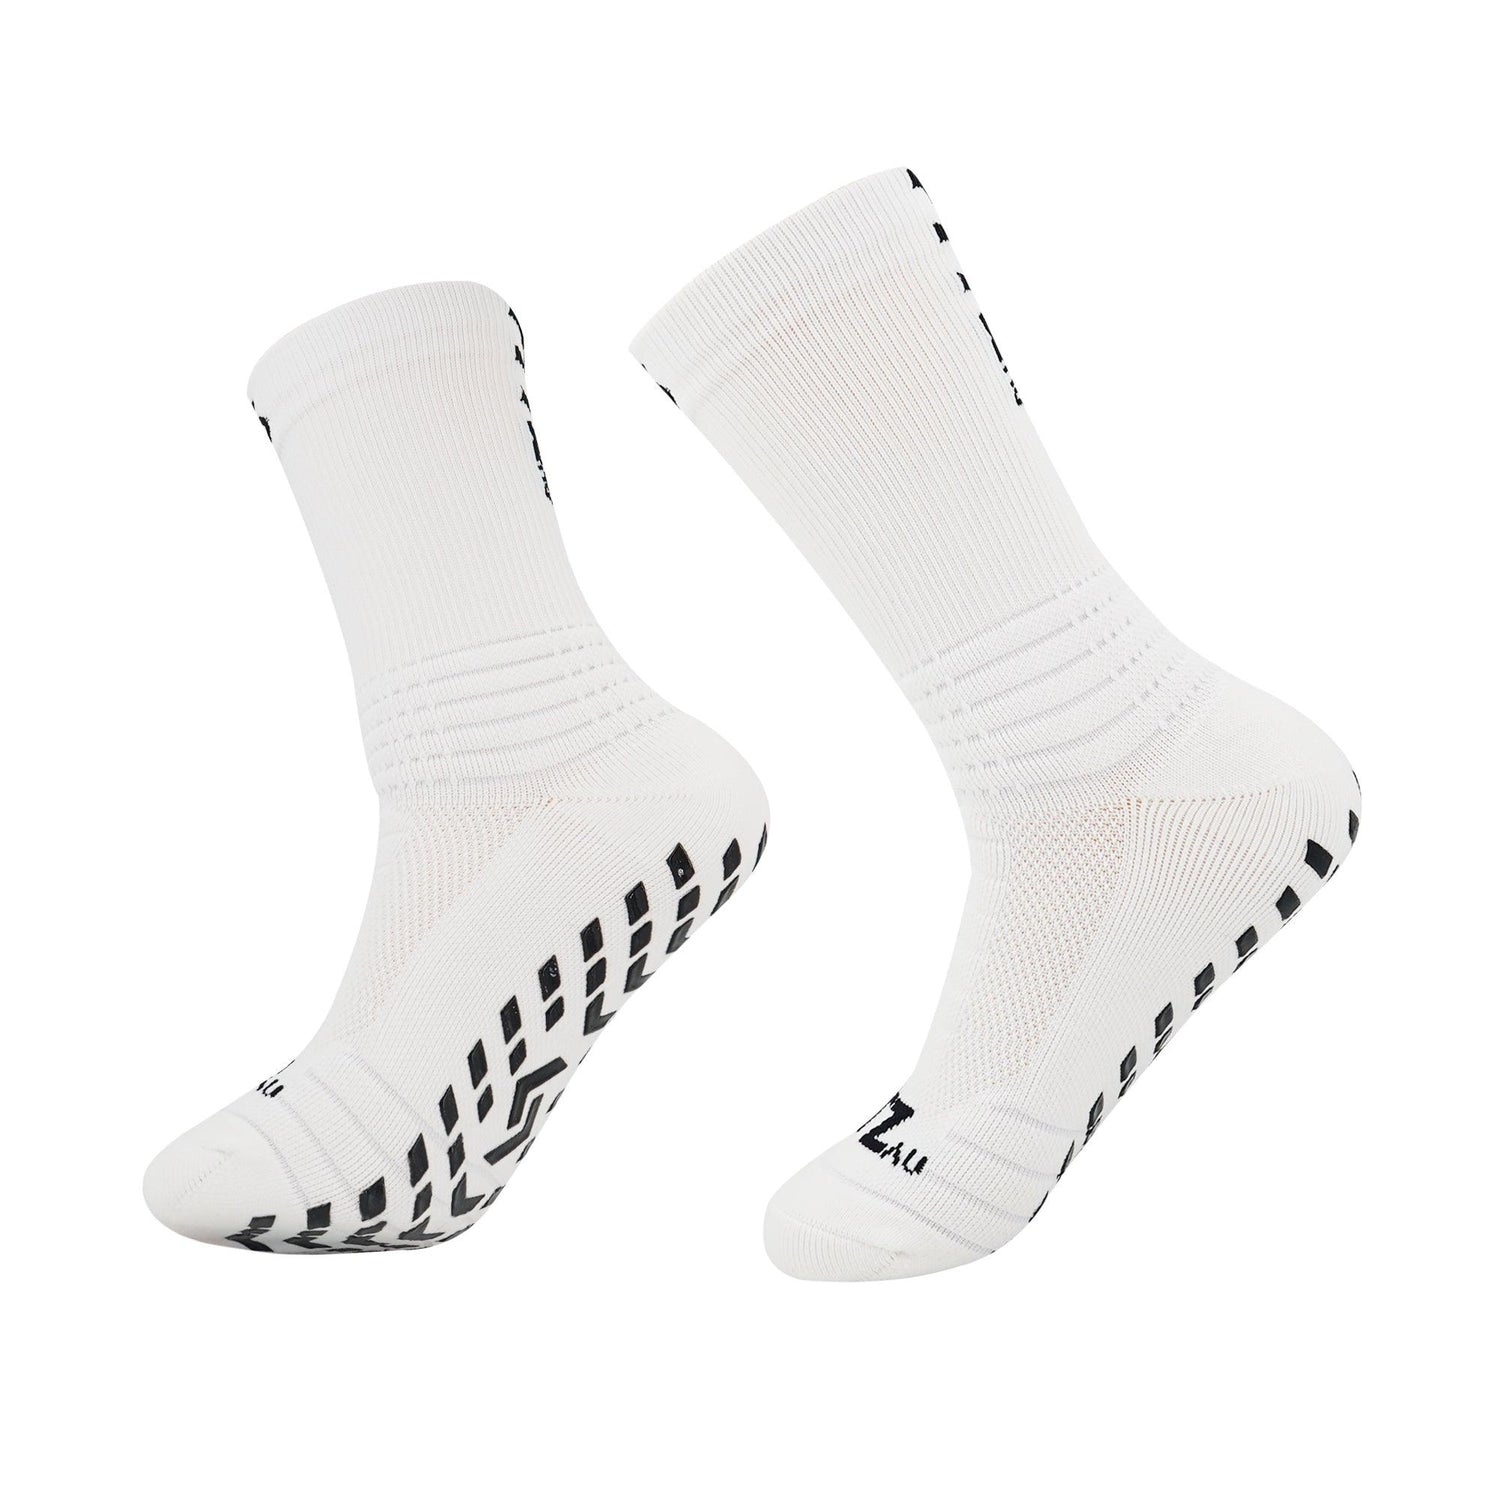 Performance Grip Socks